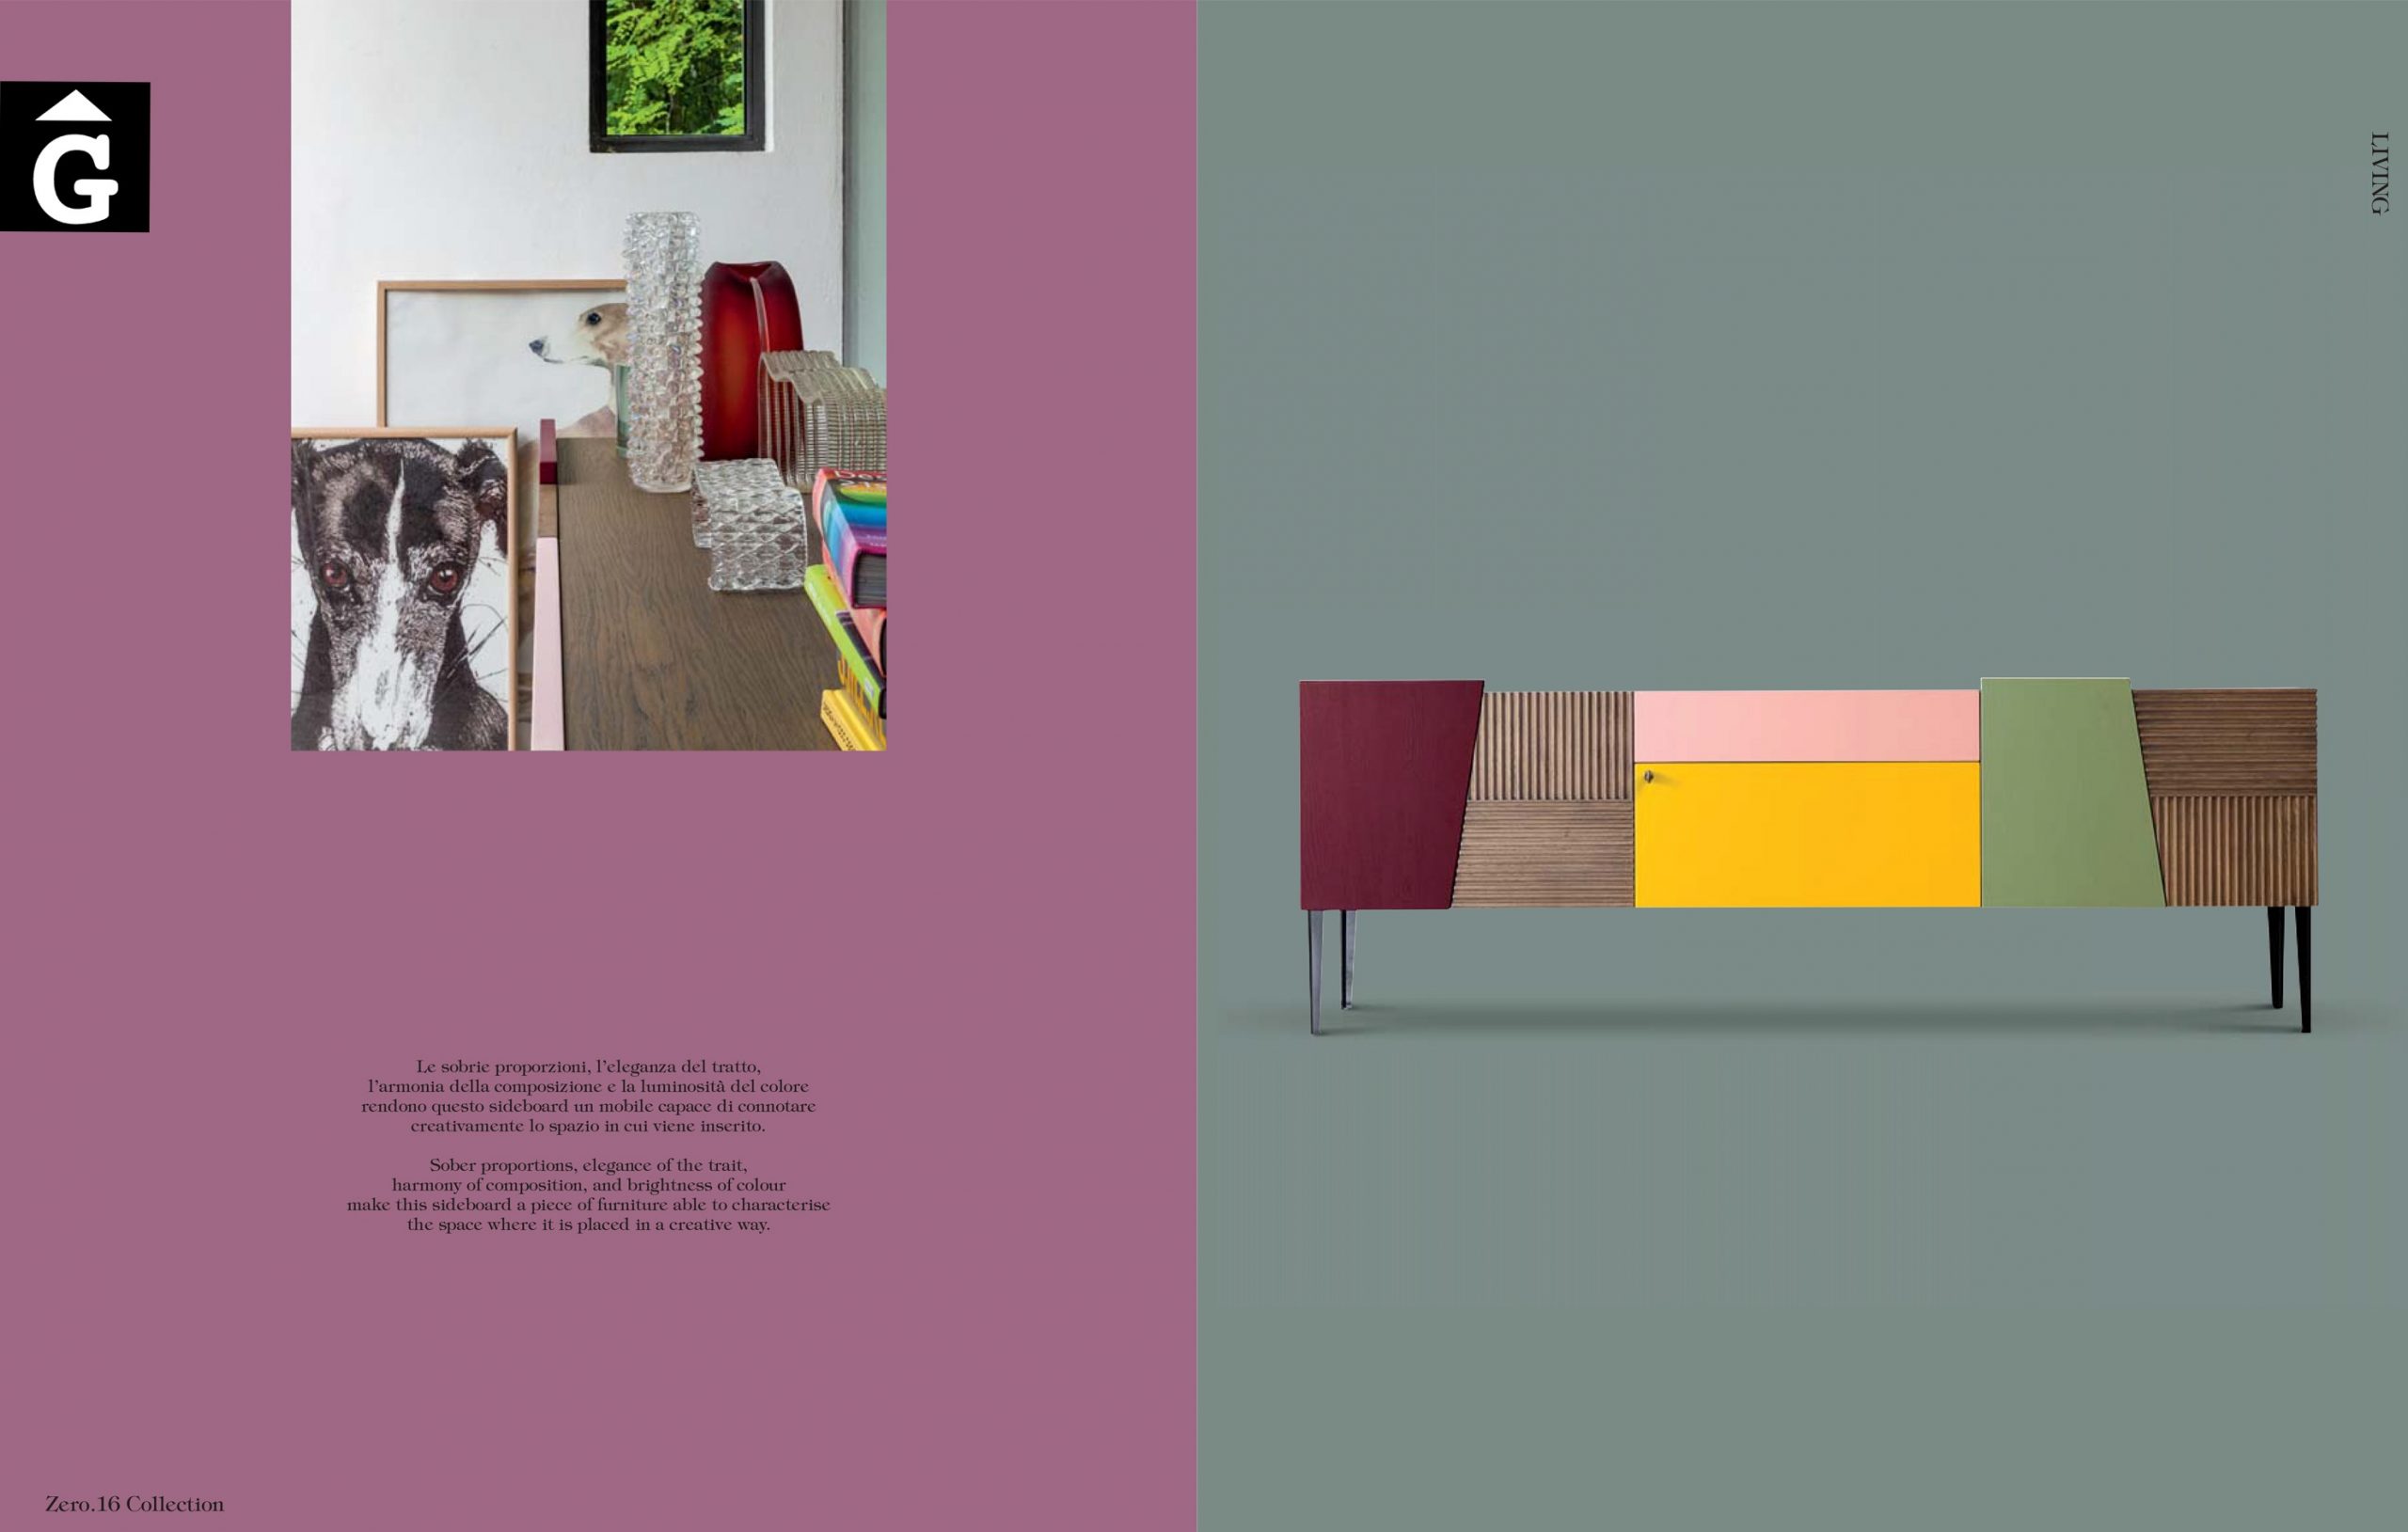 Detall moble massis roure Zero16 molt color by mobles Gifreu